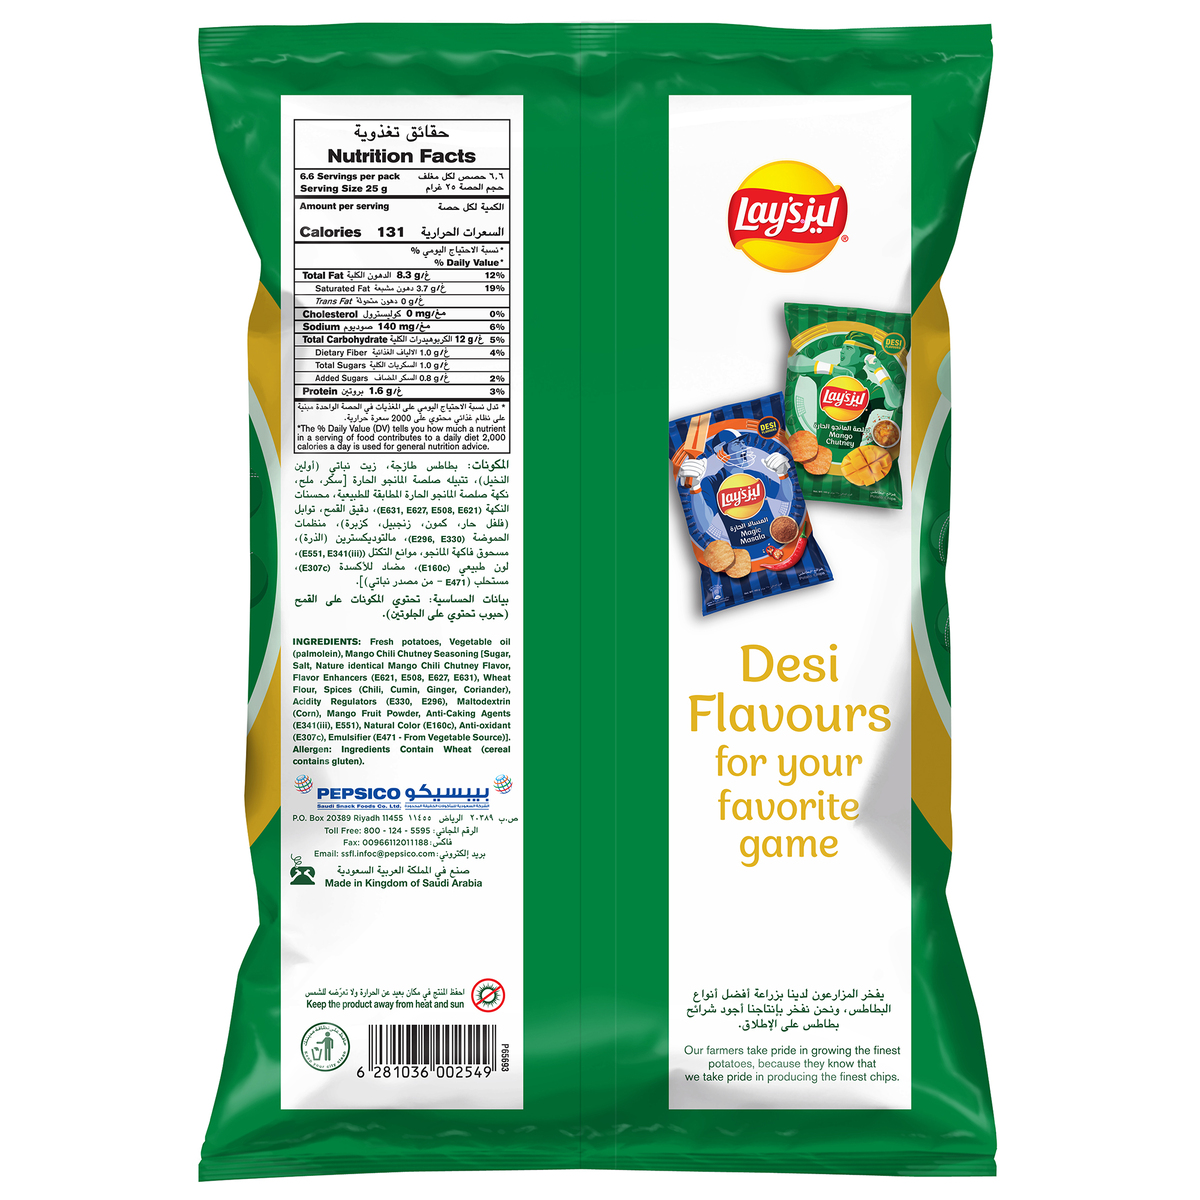 Lay's Mango Chutney Flavour Potato Chips 165 g